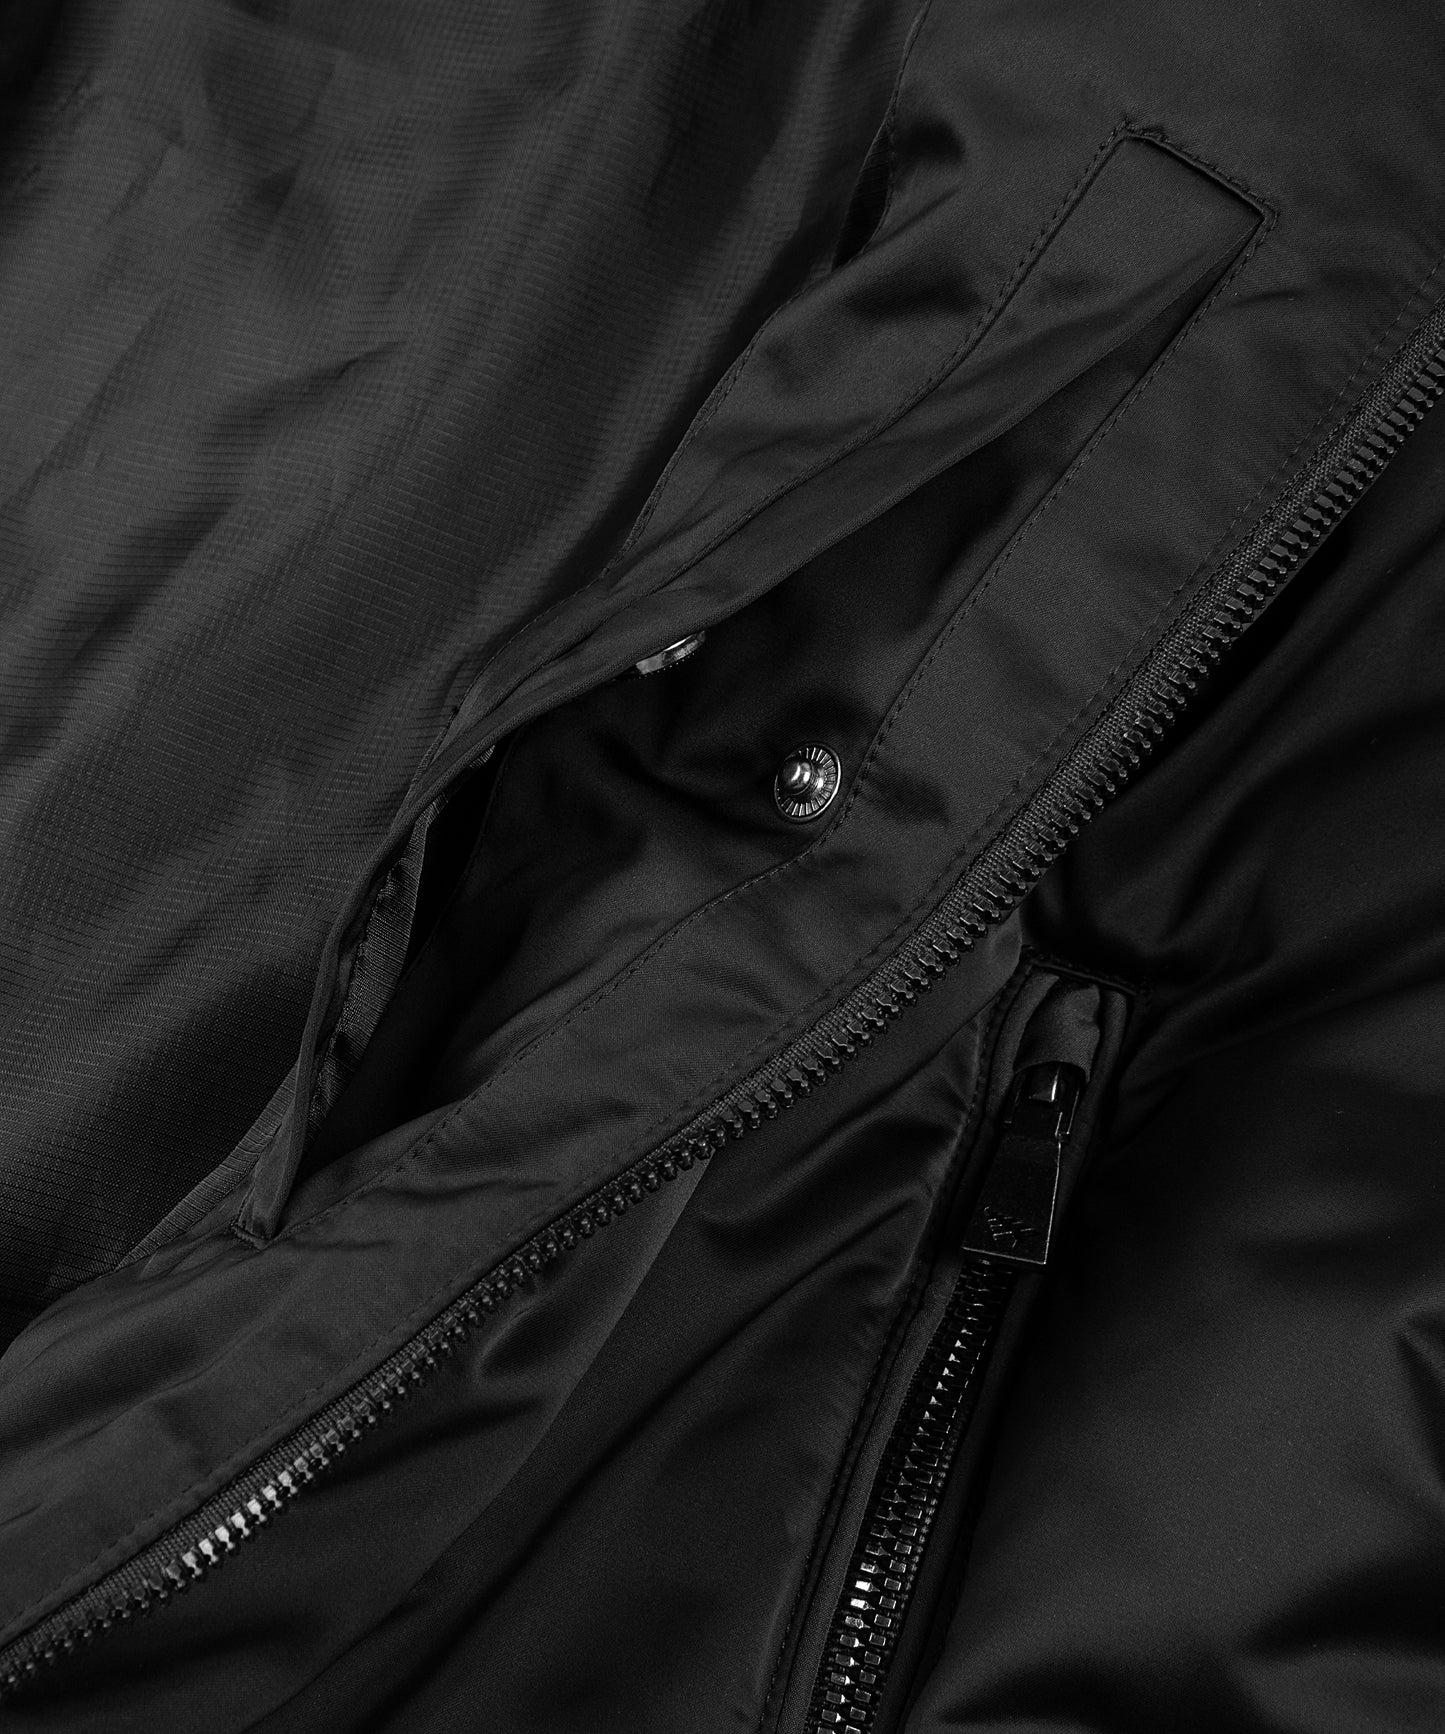 CUSTOM_ALT_TEXT: Interior welt pocket with hidden snap closure on Paper Planes Puffer Jacket, color Black.